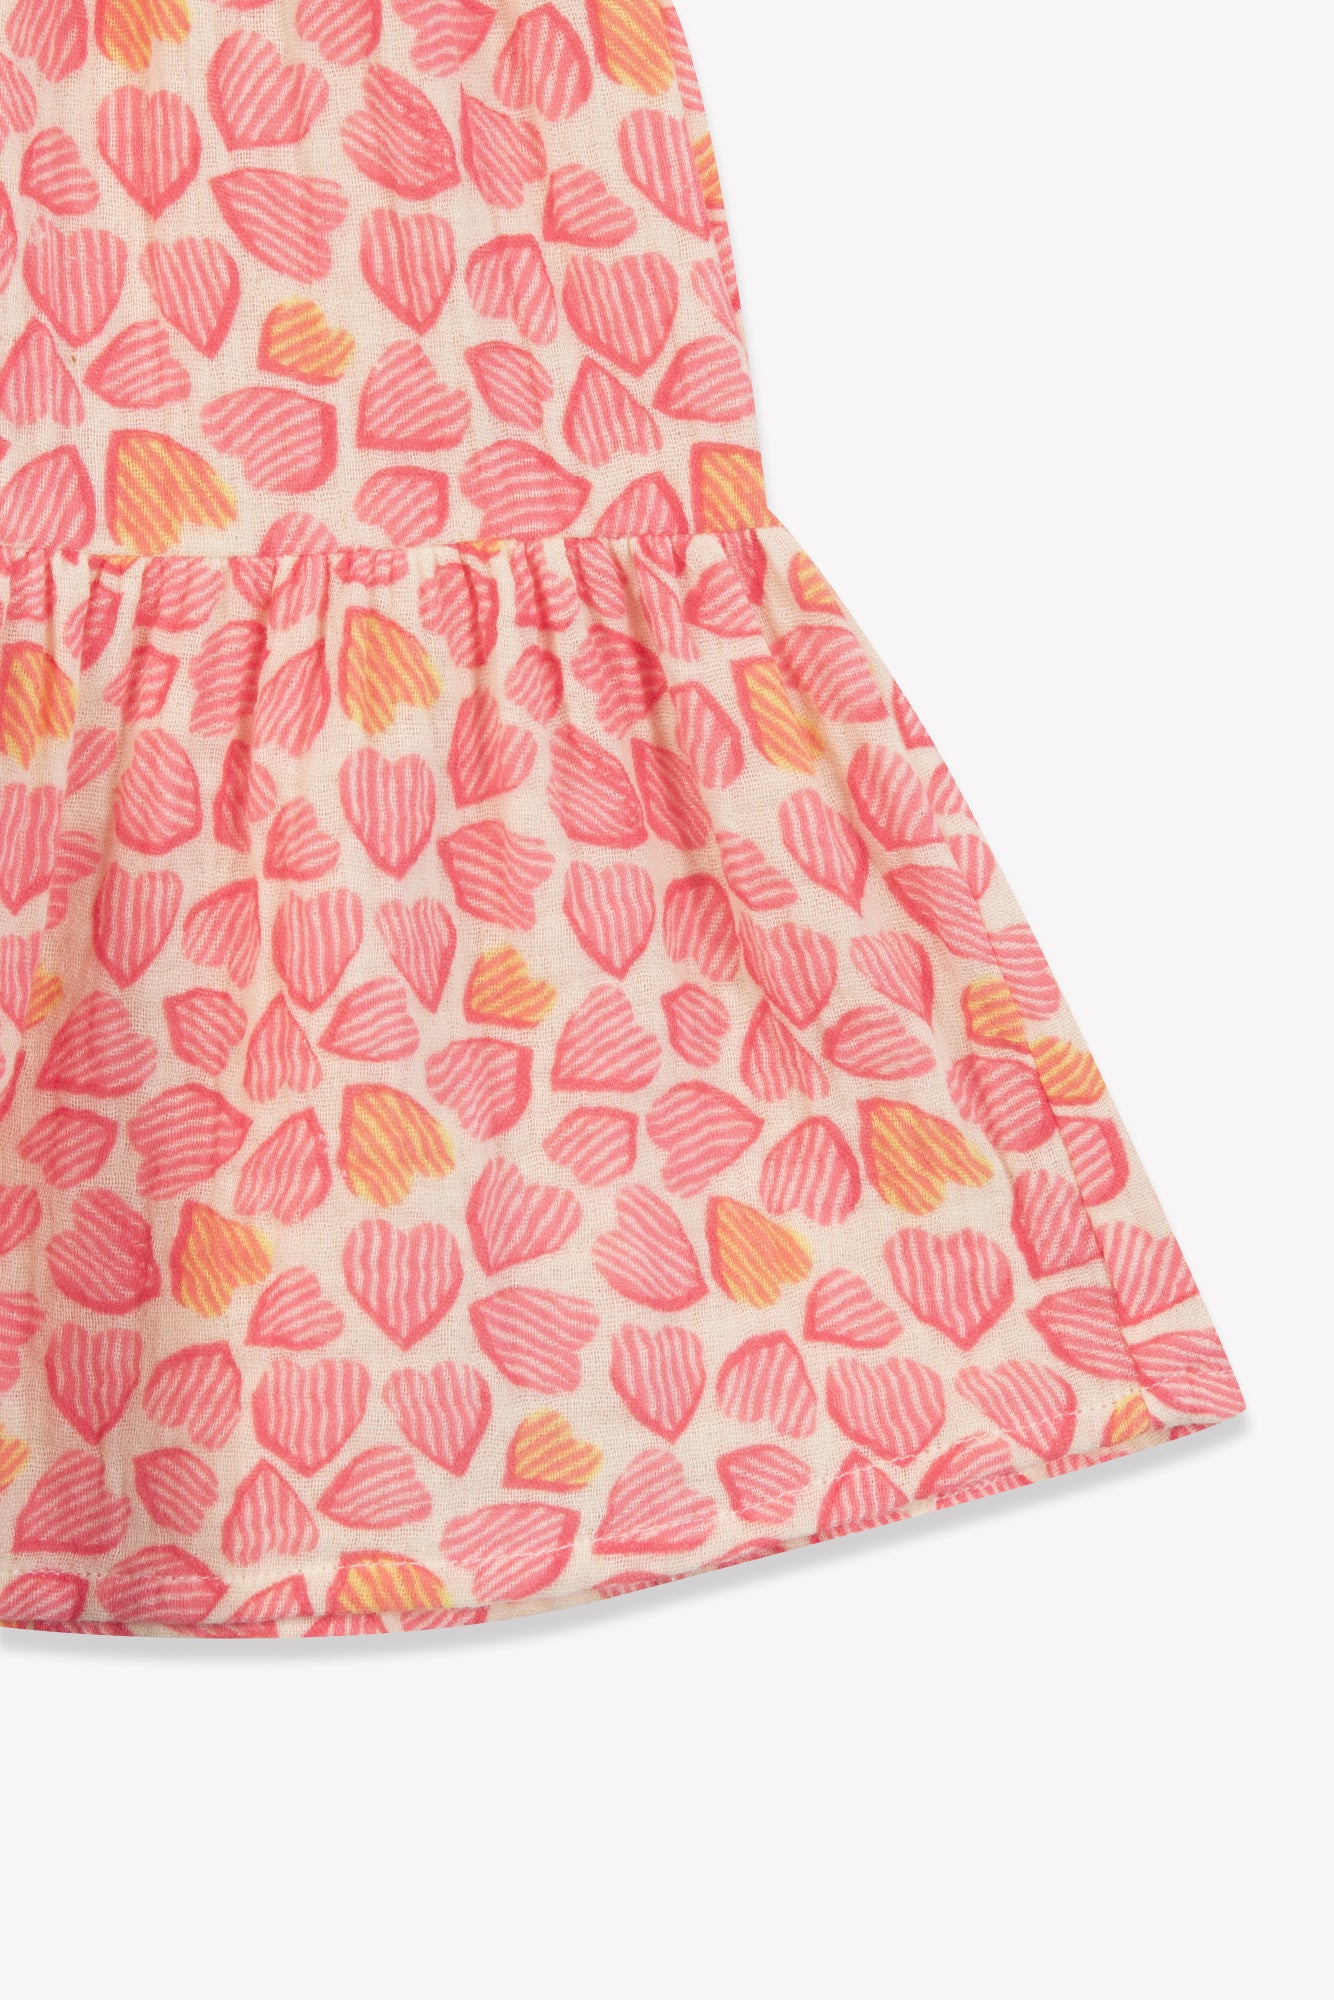 Skirt - Denon Pink Double cotton gauze Printe heart